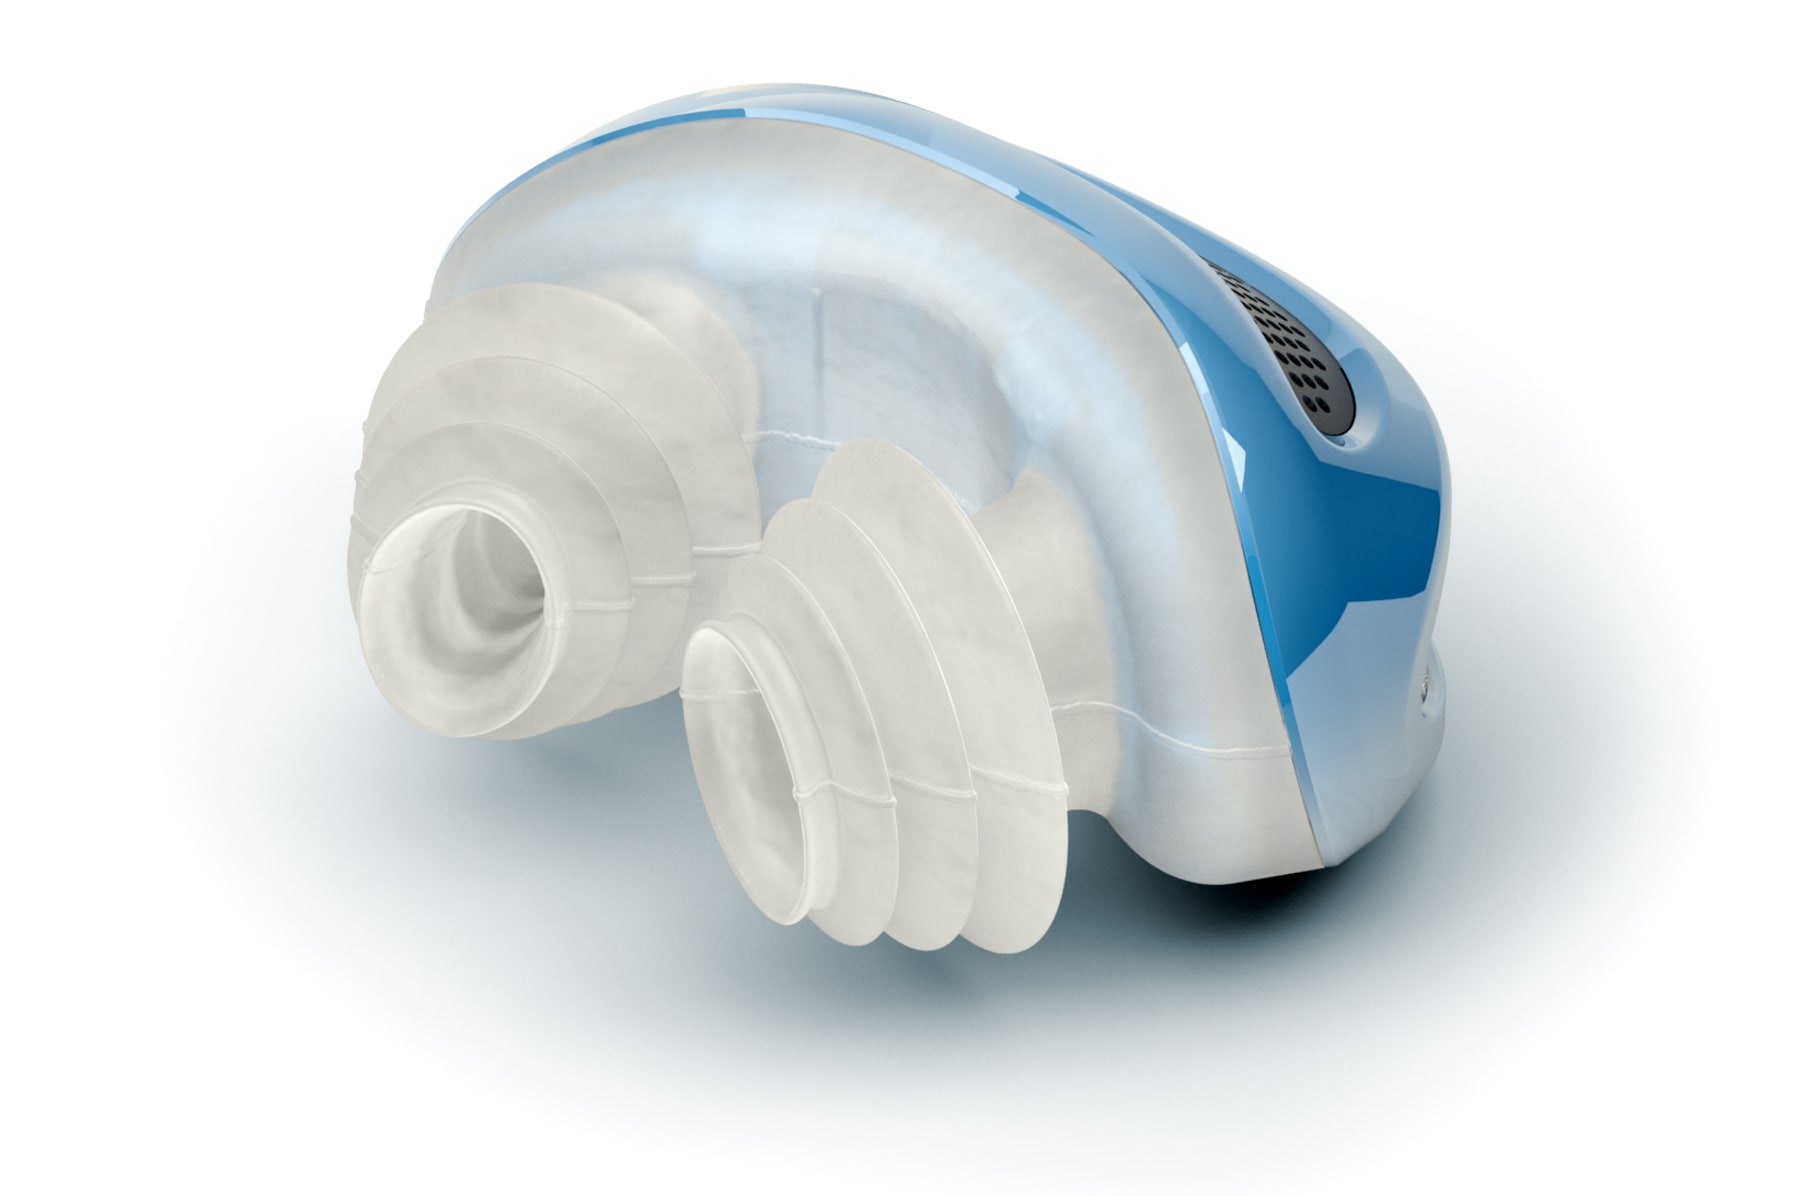 Airing micro-CPAP updates